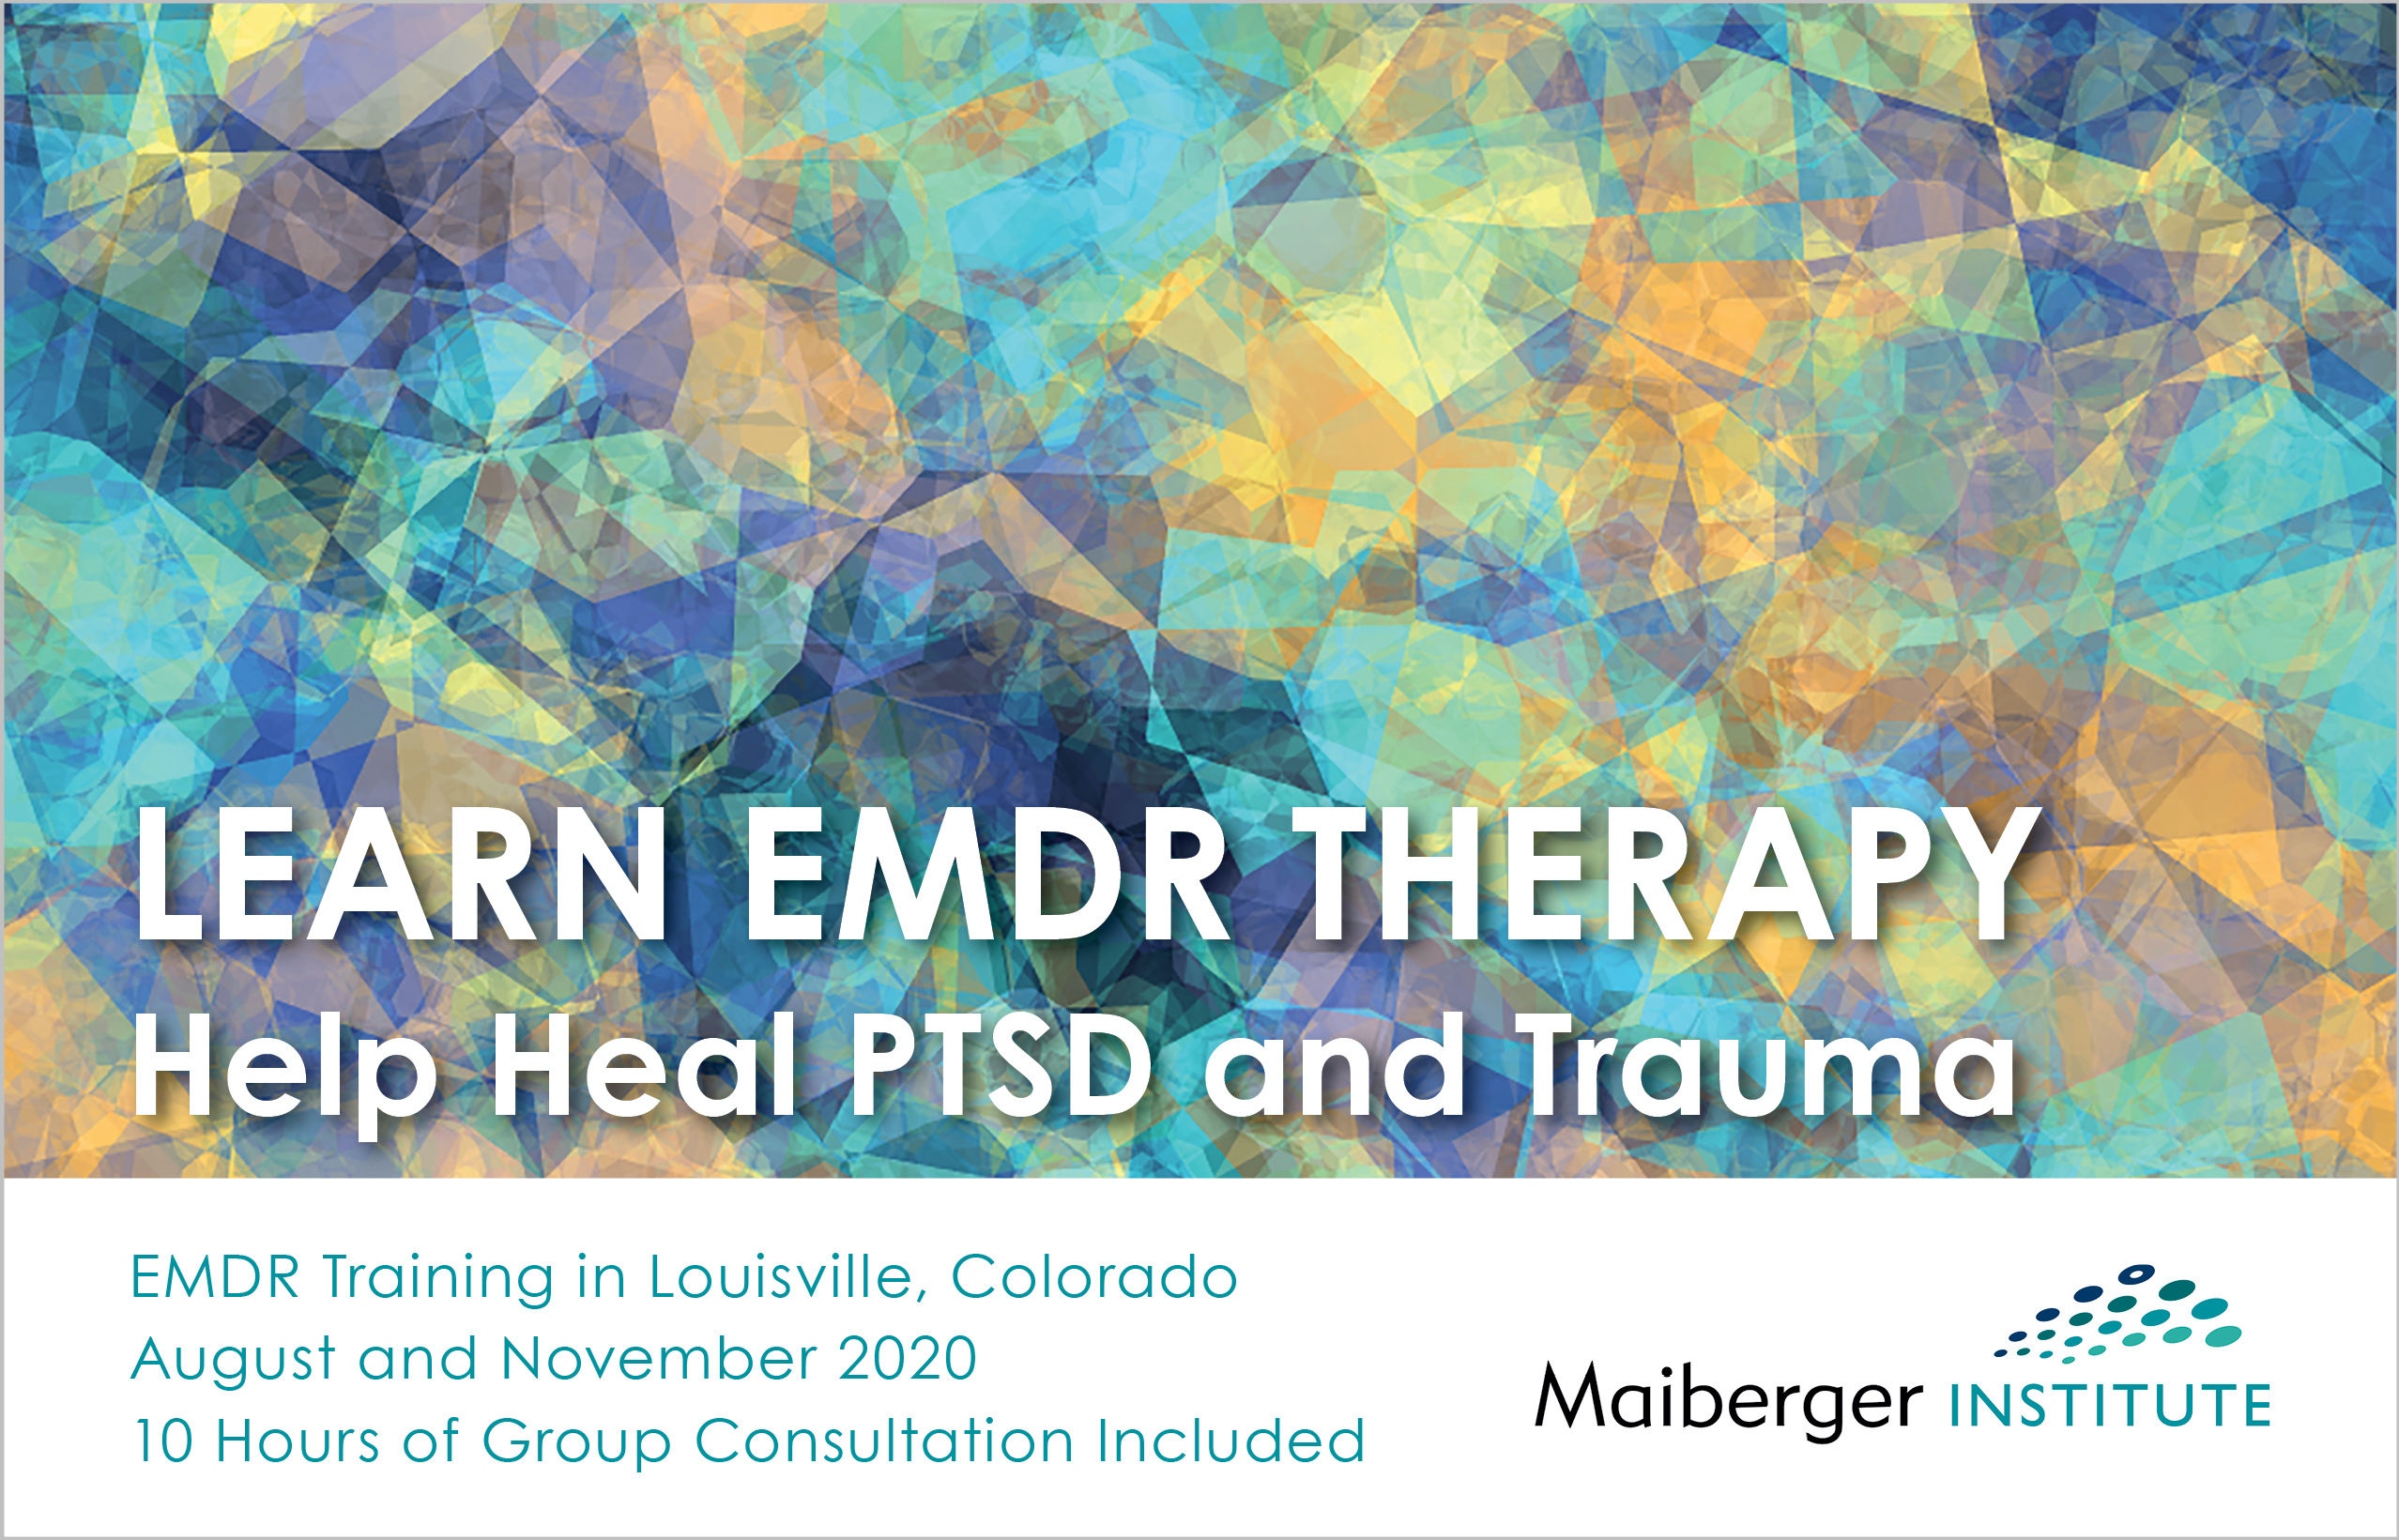 EMDR Training in Louisville Colorado - August and November 2020 - EMDR Events Calendar - Maiberger Institute